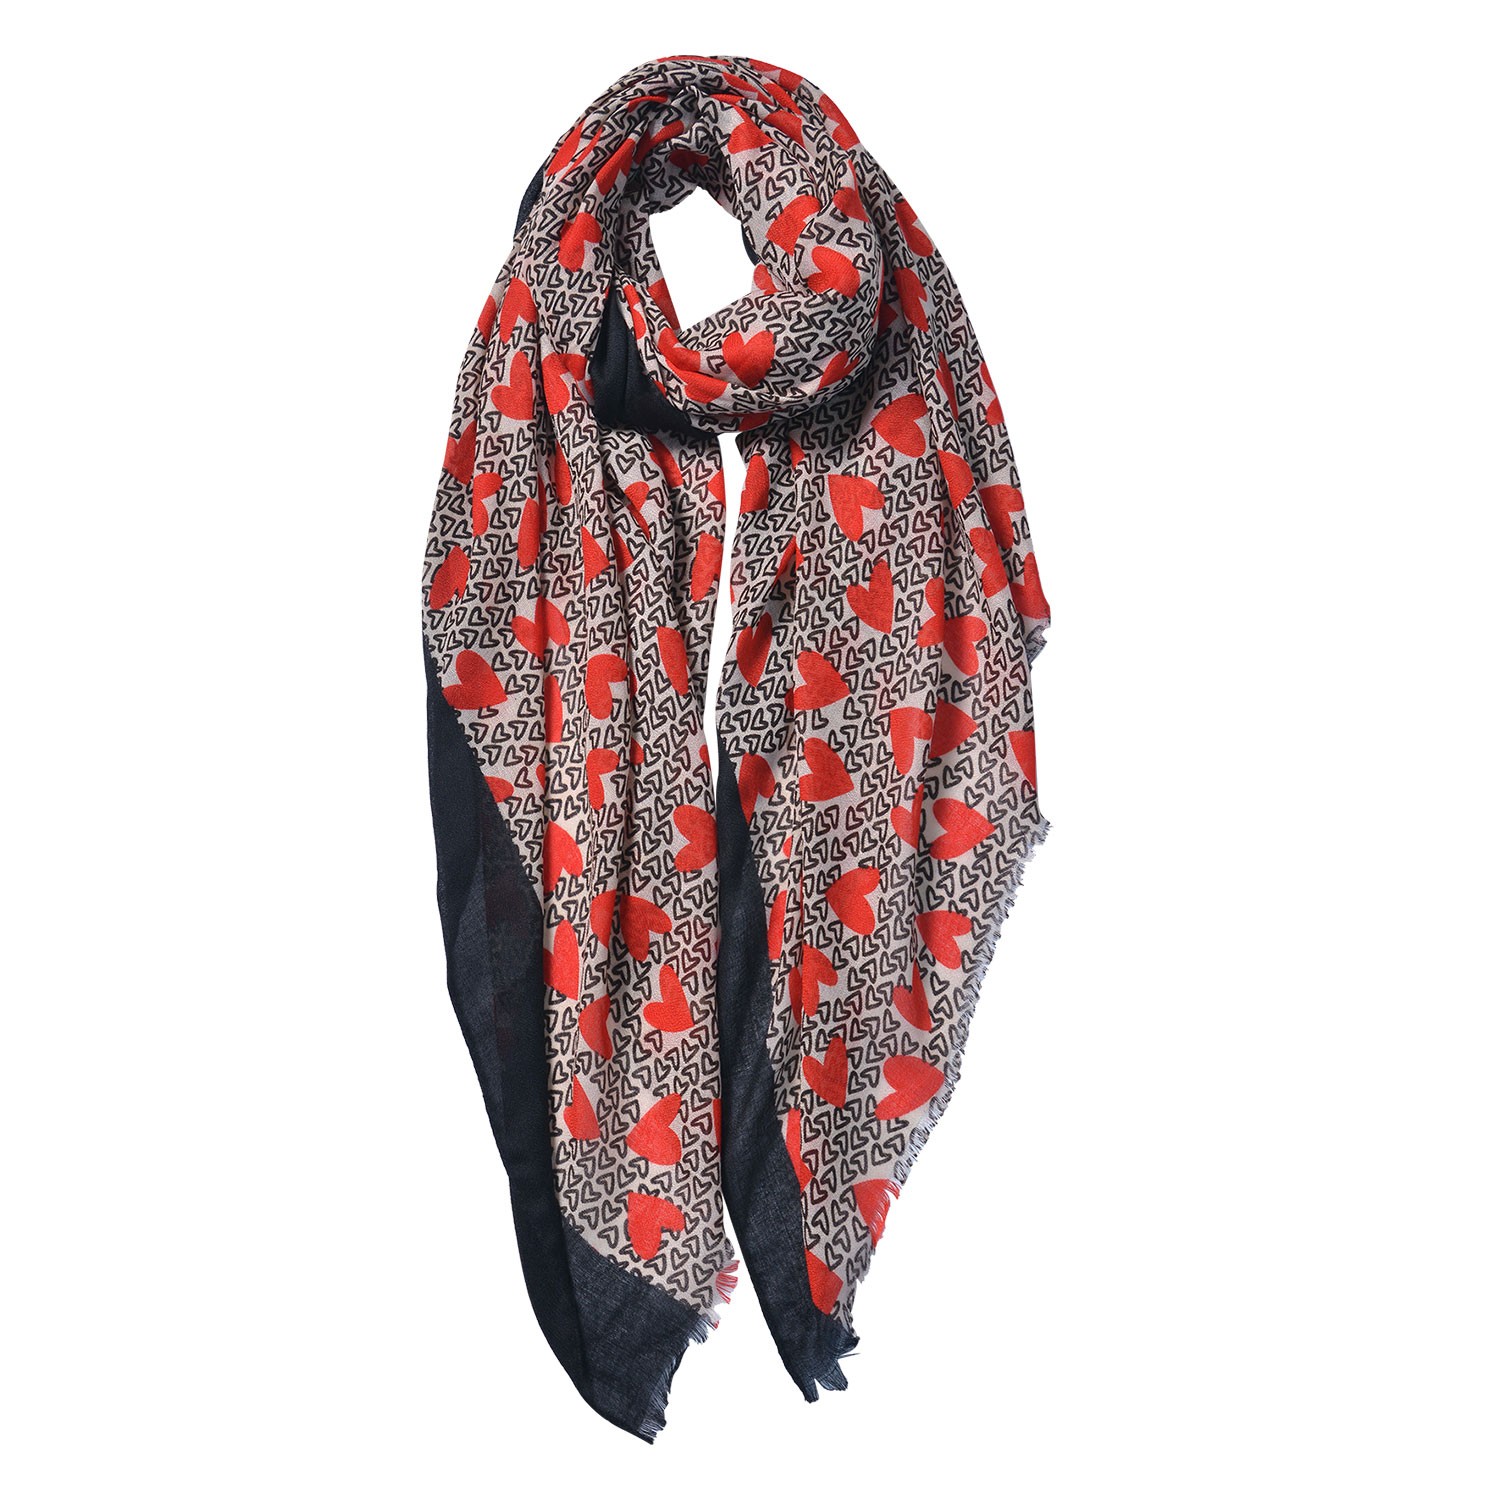 Černo béžový šátek s červenými srdíčky - 80*180 cm JZSC0545R